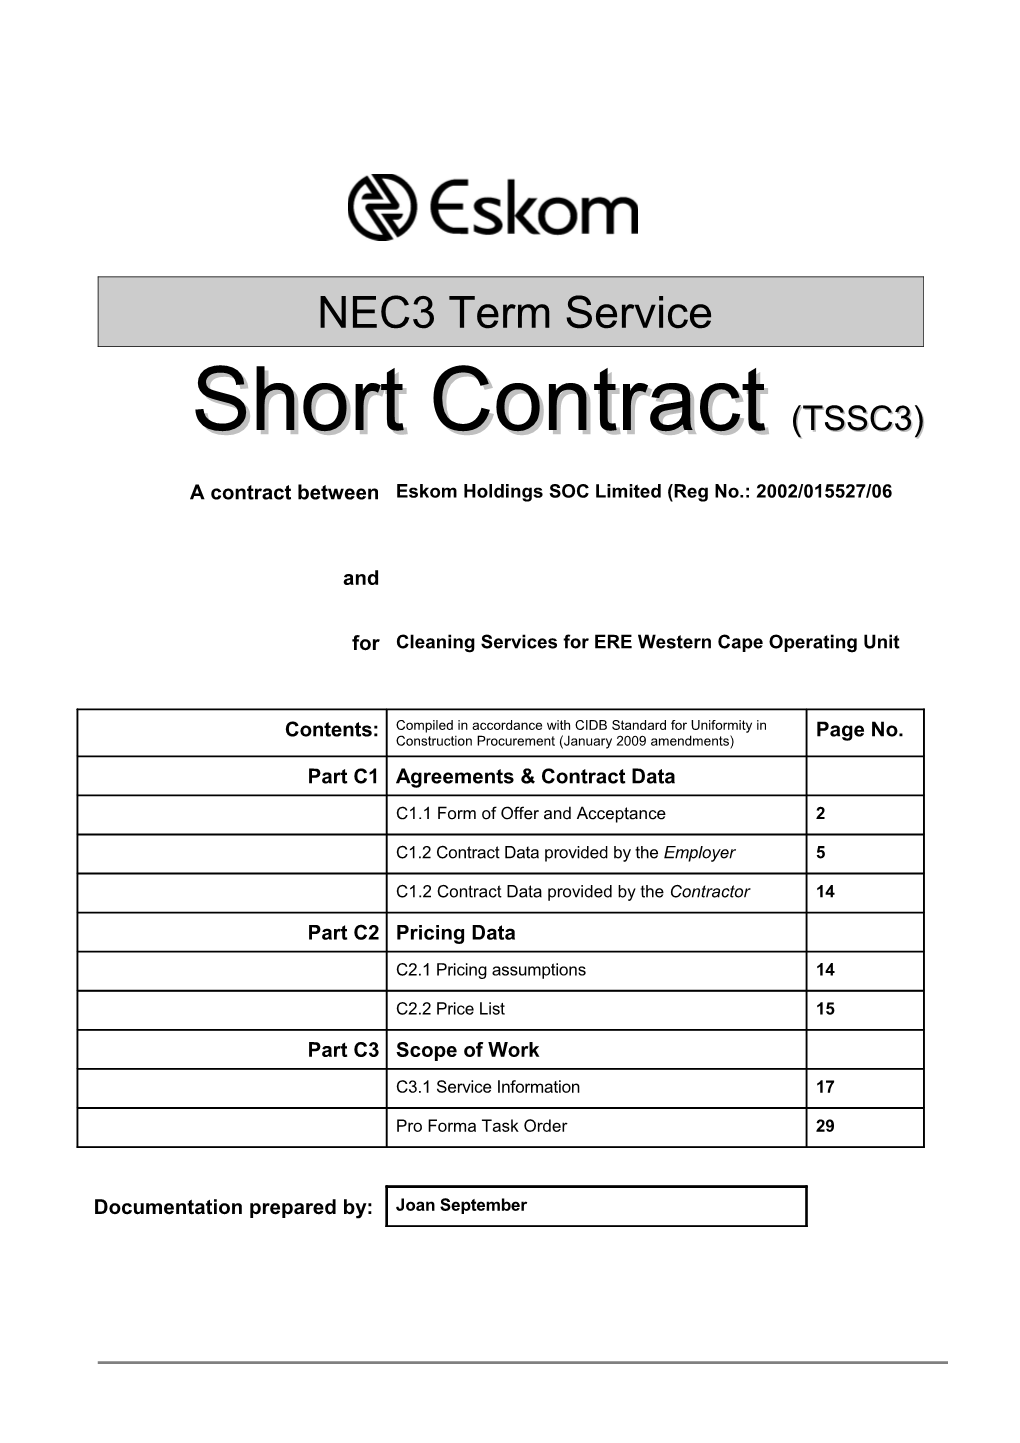 Eskom Holdings SOC Limitedcontract Number ______